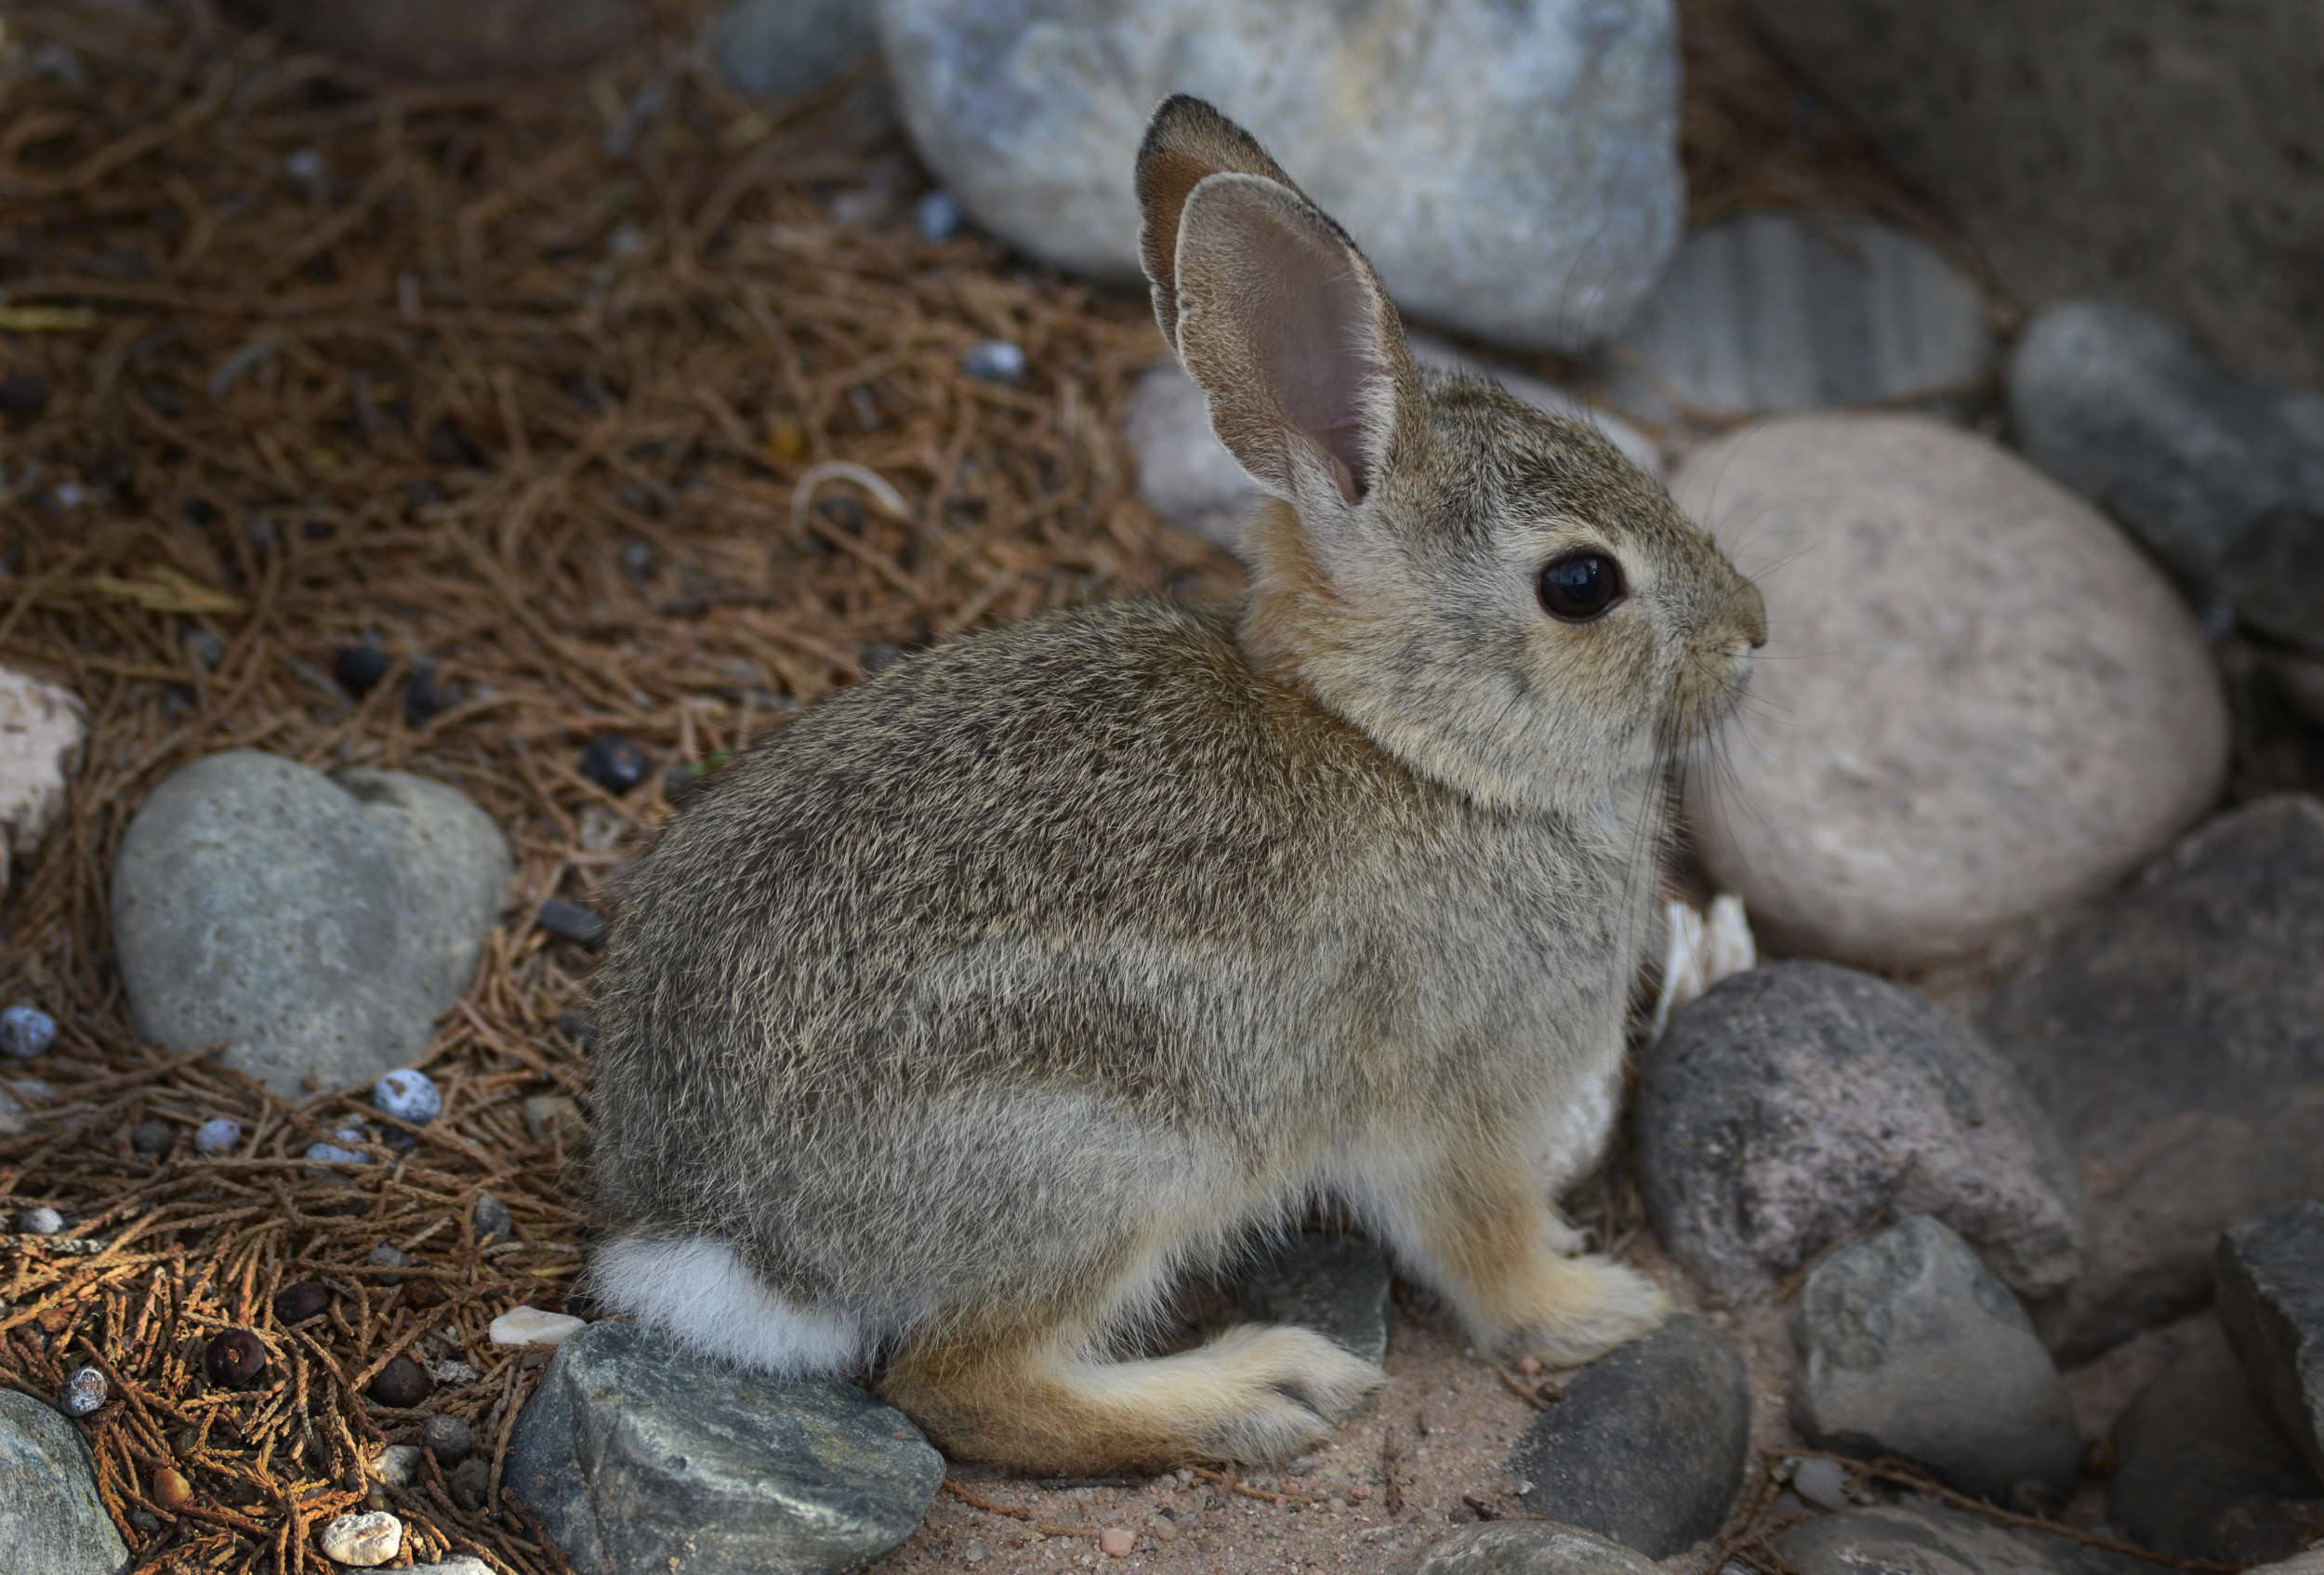 Deadly Hemorrhagic Disease That Kills 80 Percent of Rabbits Spreading Across U.S.